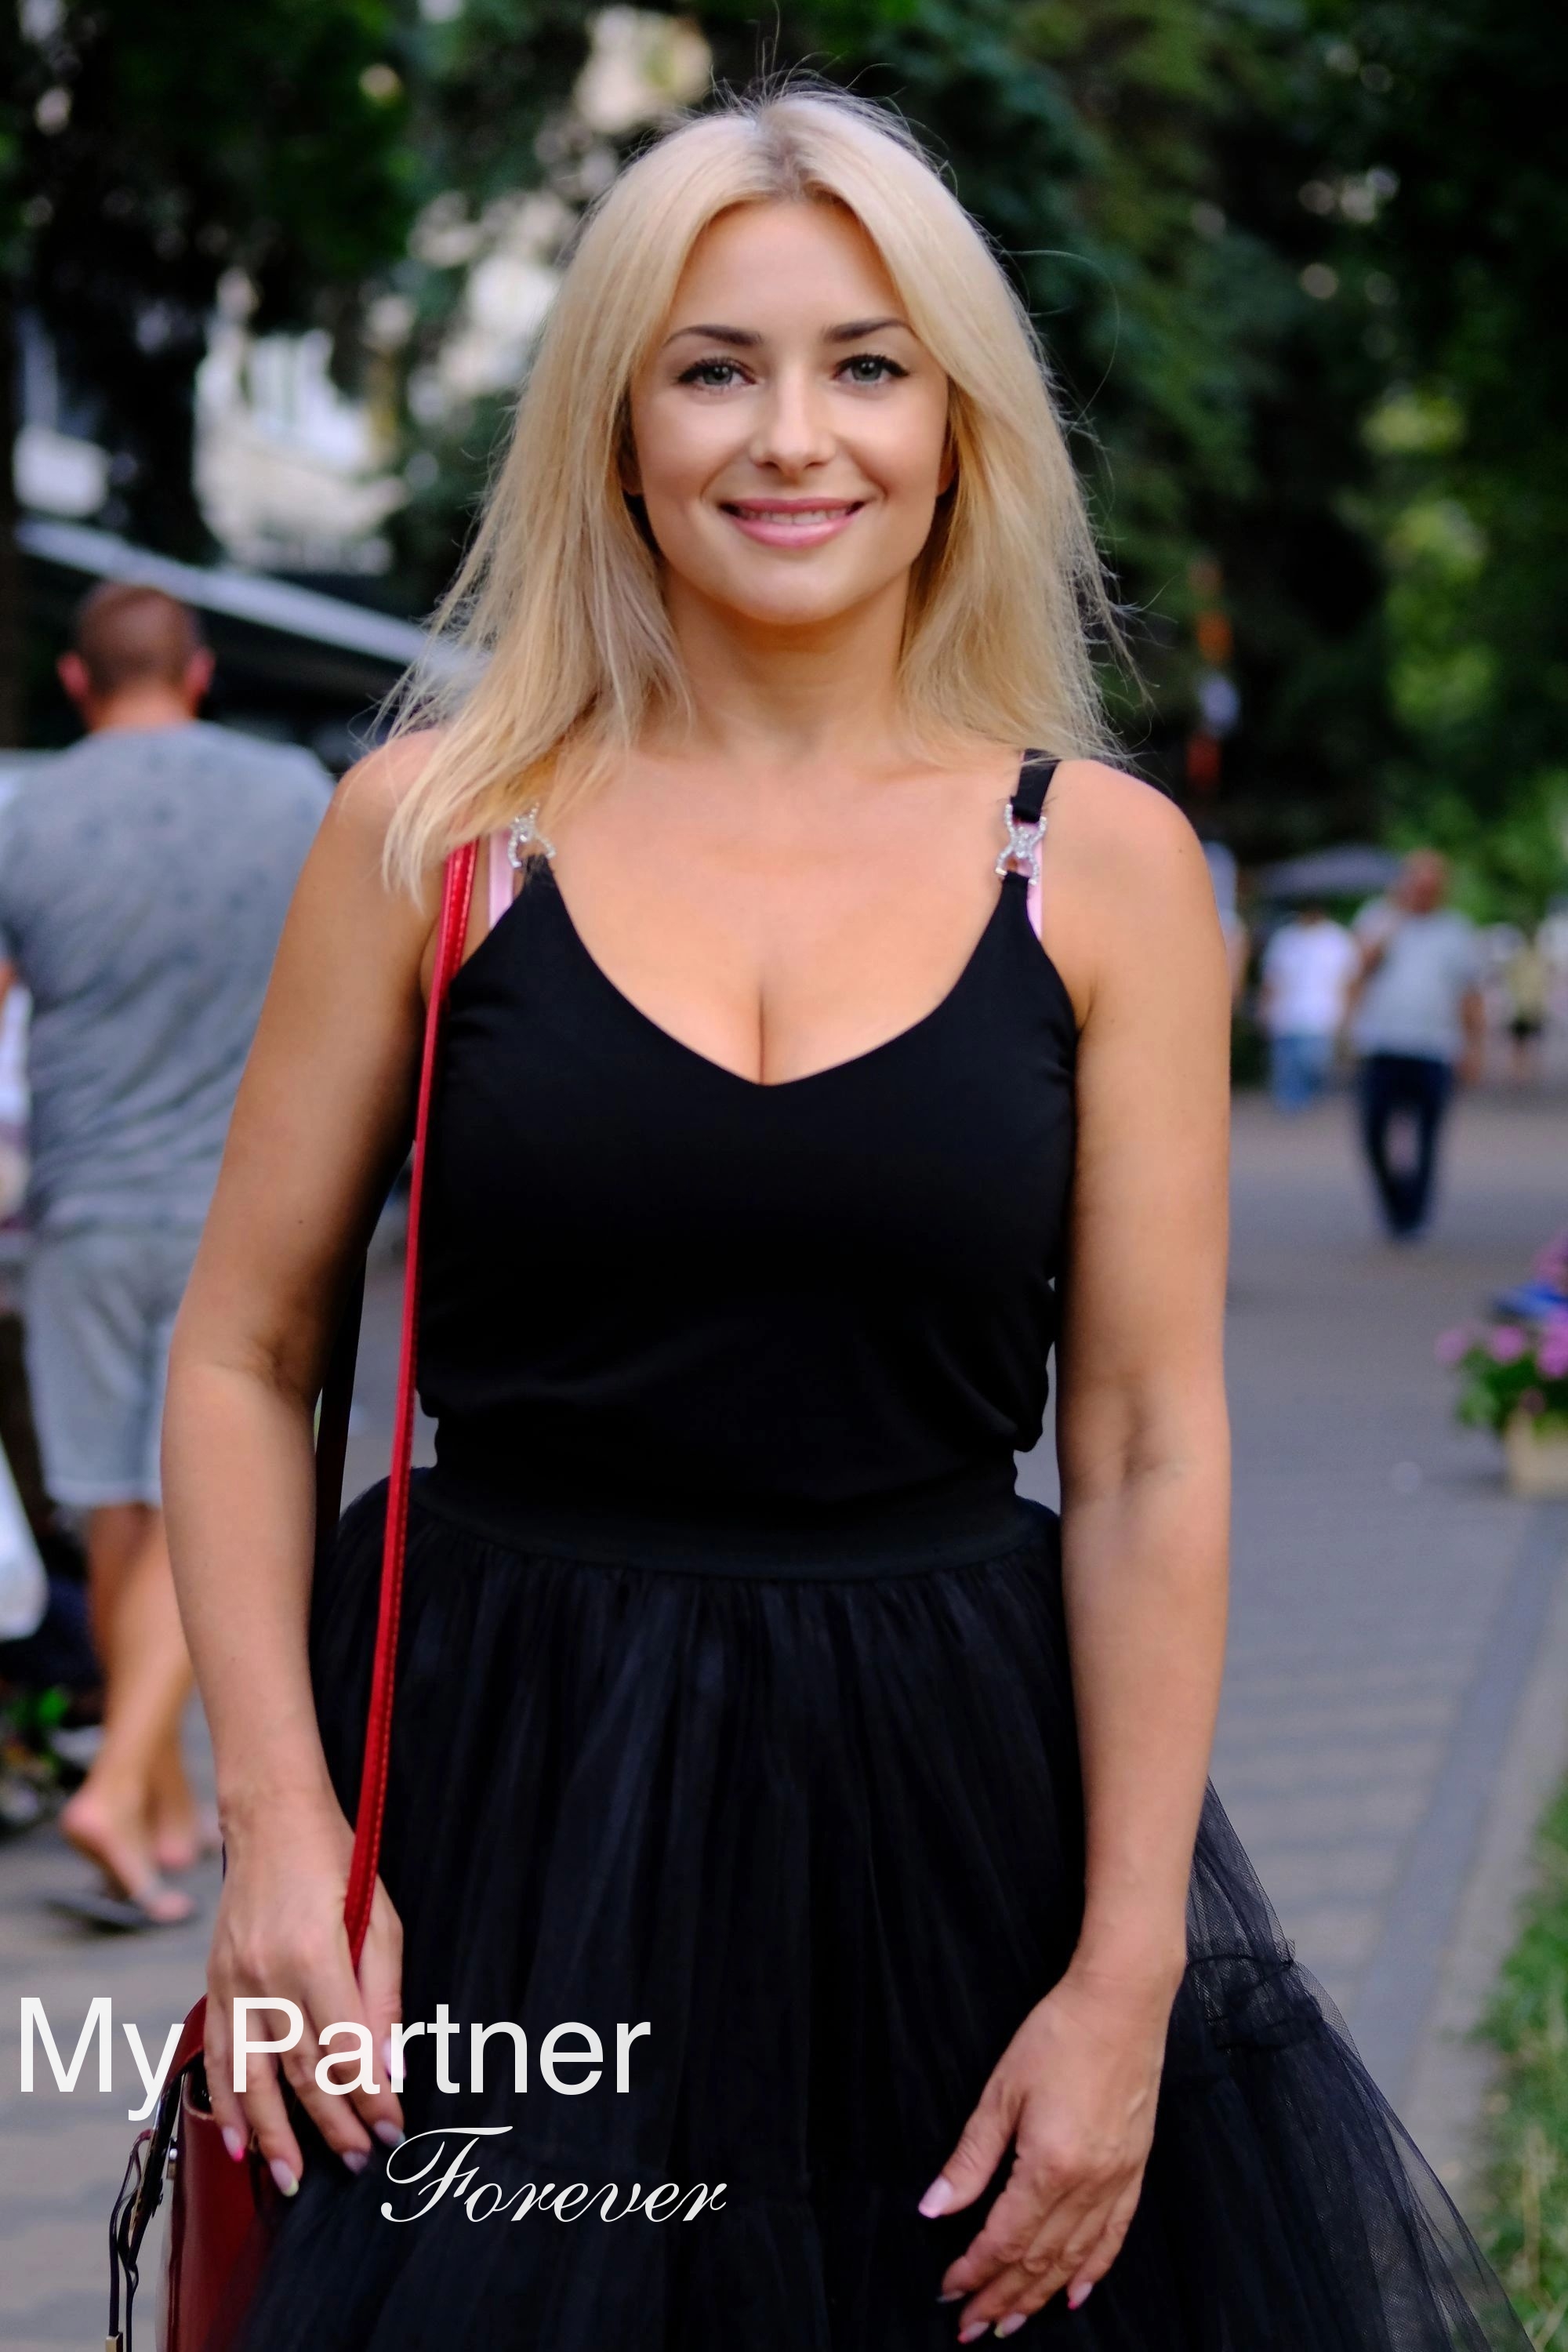 Meet Pretty Ukrainian Girl Irina from Kiev, Ukraine